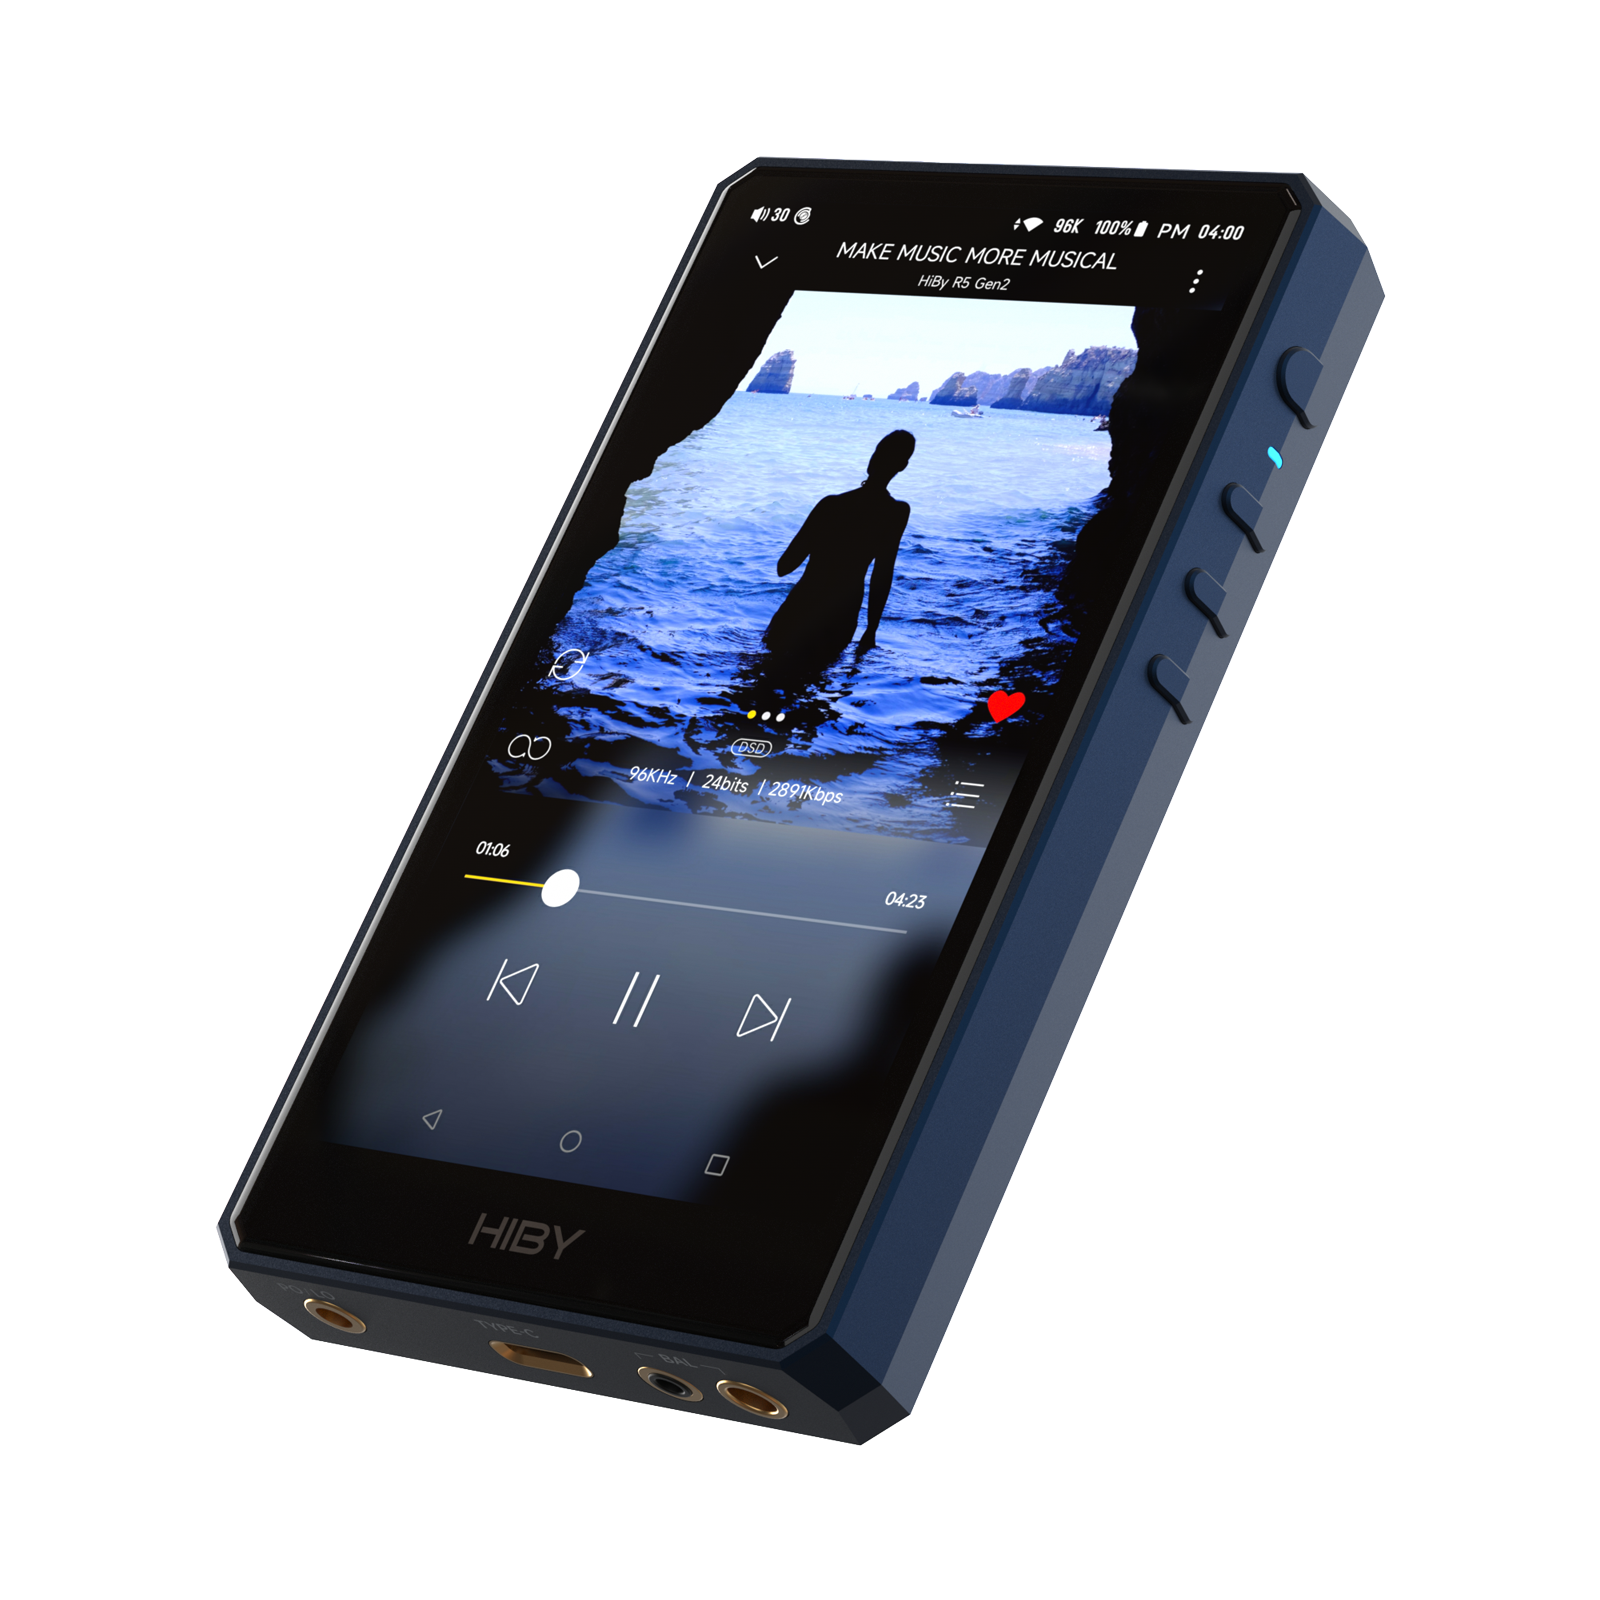 HiBy R5 II - Hi-Res Audio Player Medium-end Android DAP